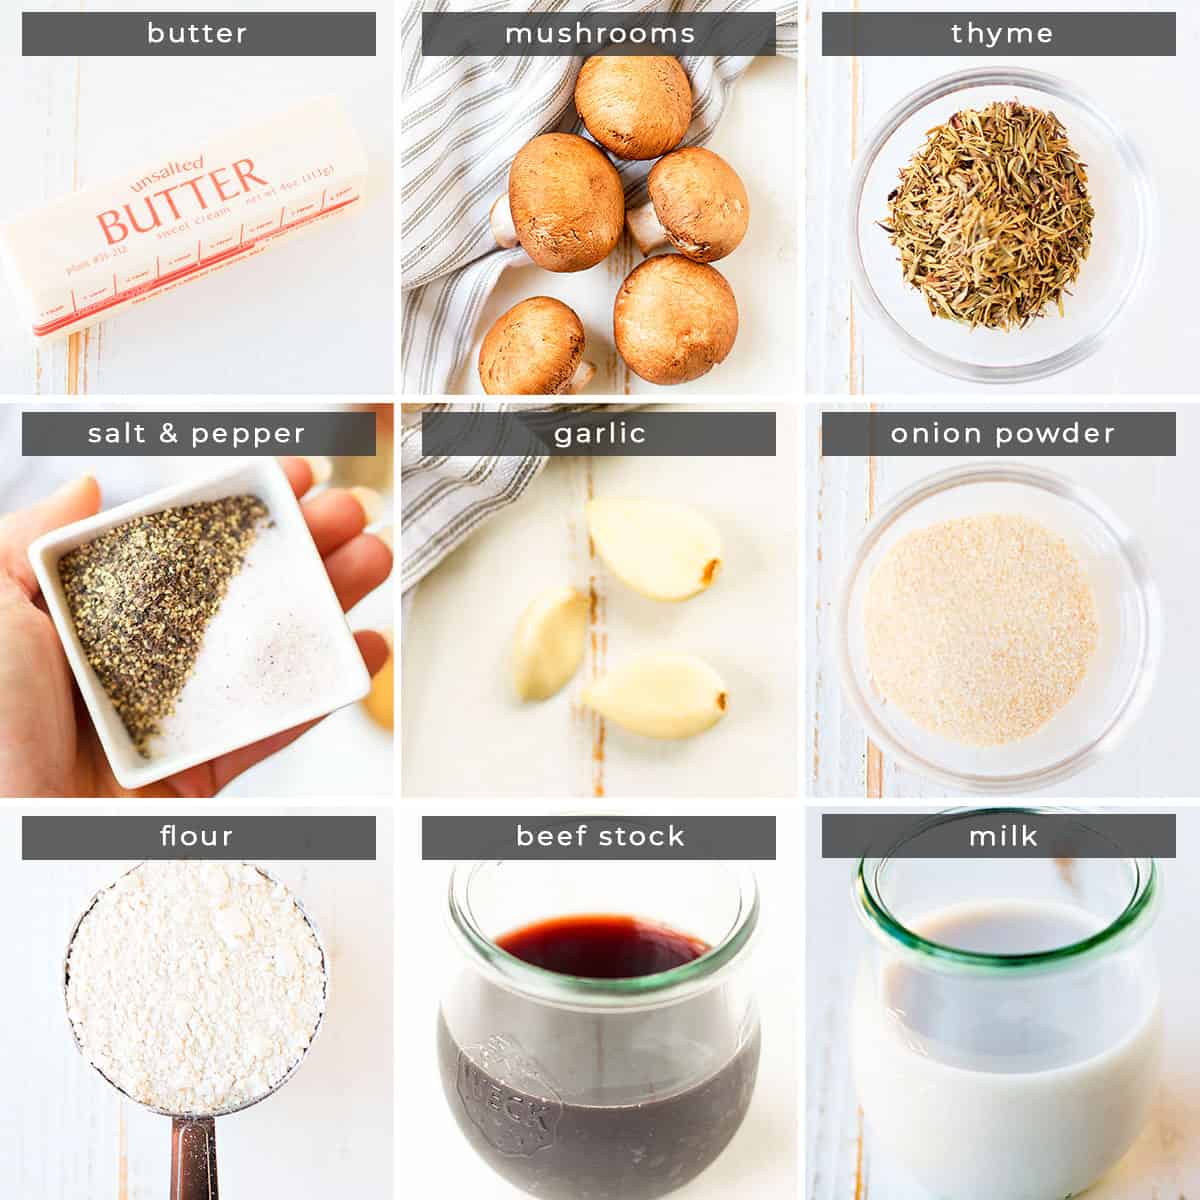 Image showing recipe ingredients butter, mushrooms, thyme, salt & pepper, garlic, onion powder, flour, beef stock, and milk.